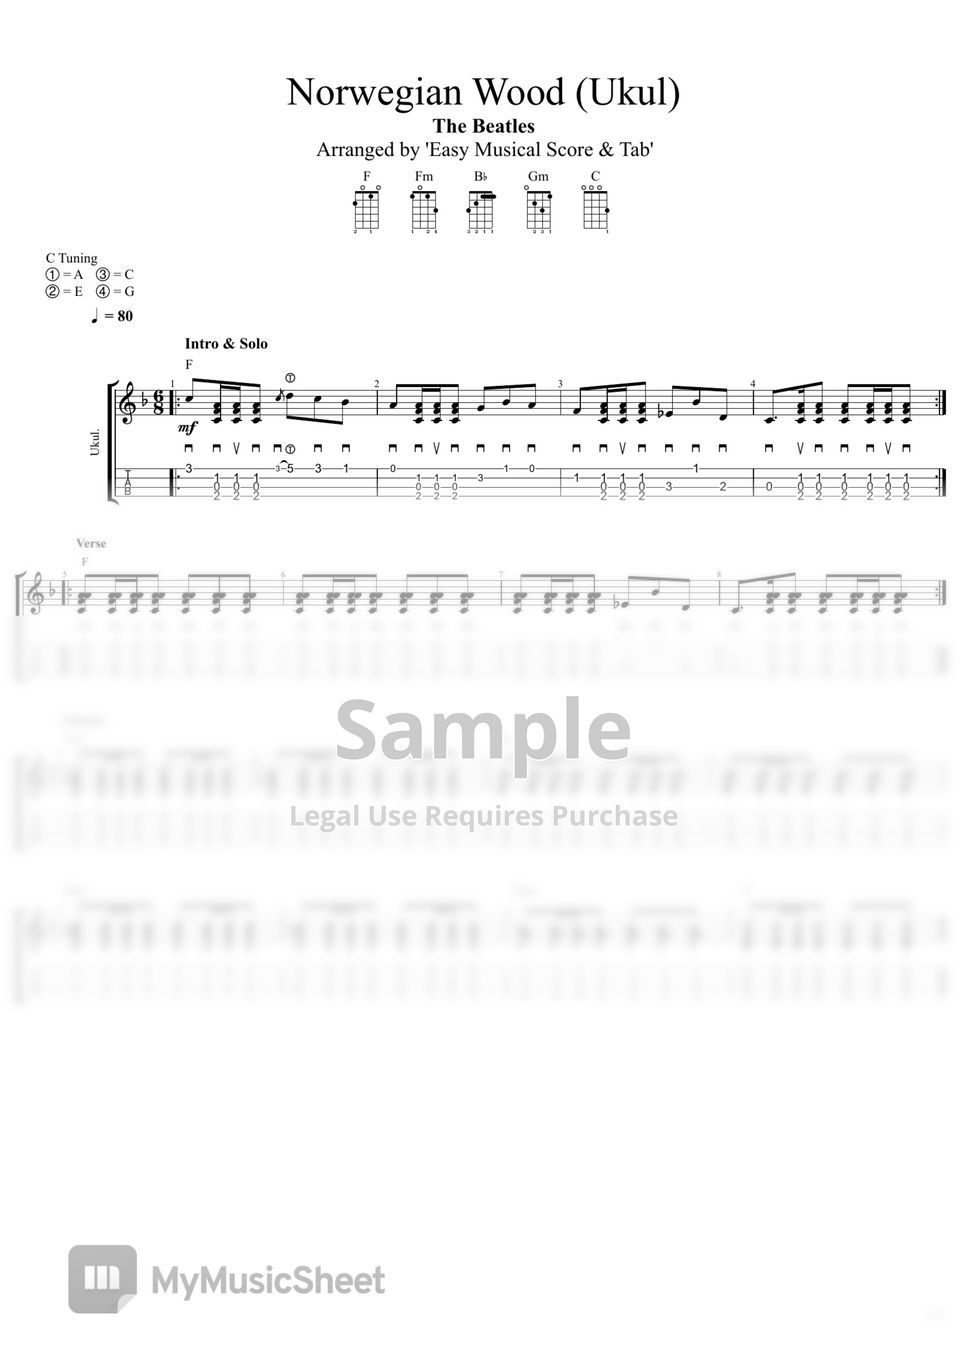 The Beatles - Norwegian Wood (Tabs for Ukulele) by Easy Musical Score & Tab